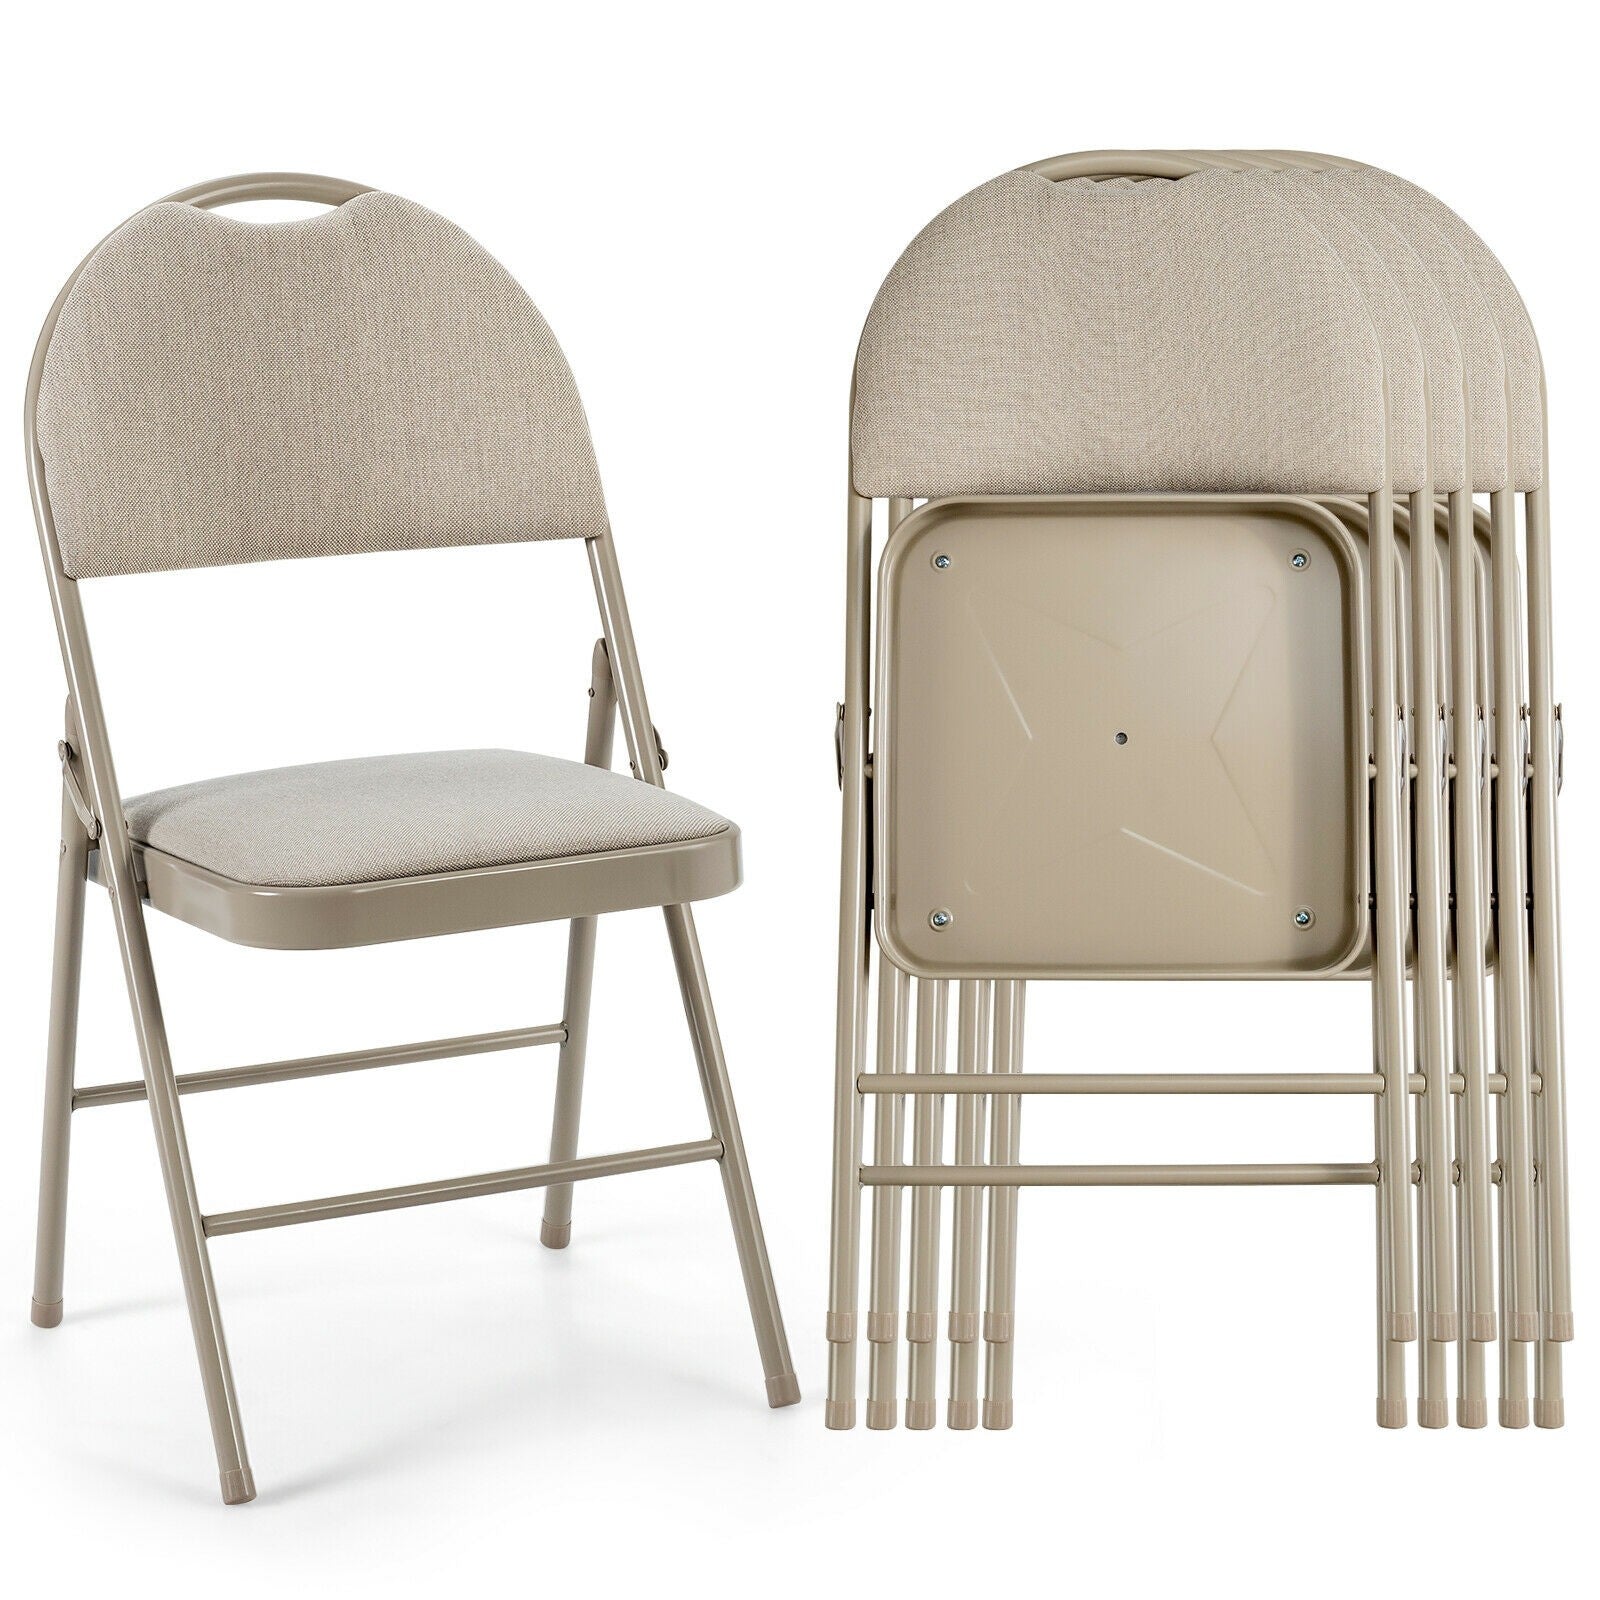 6 PCS Folding Chairs Set Portable Backrest Chair - Giantexus